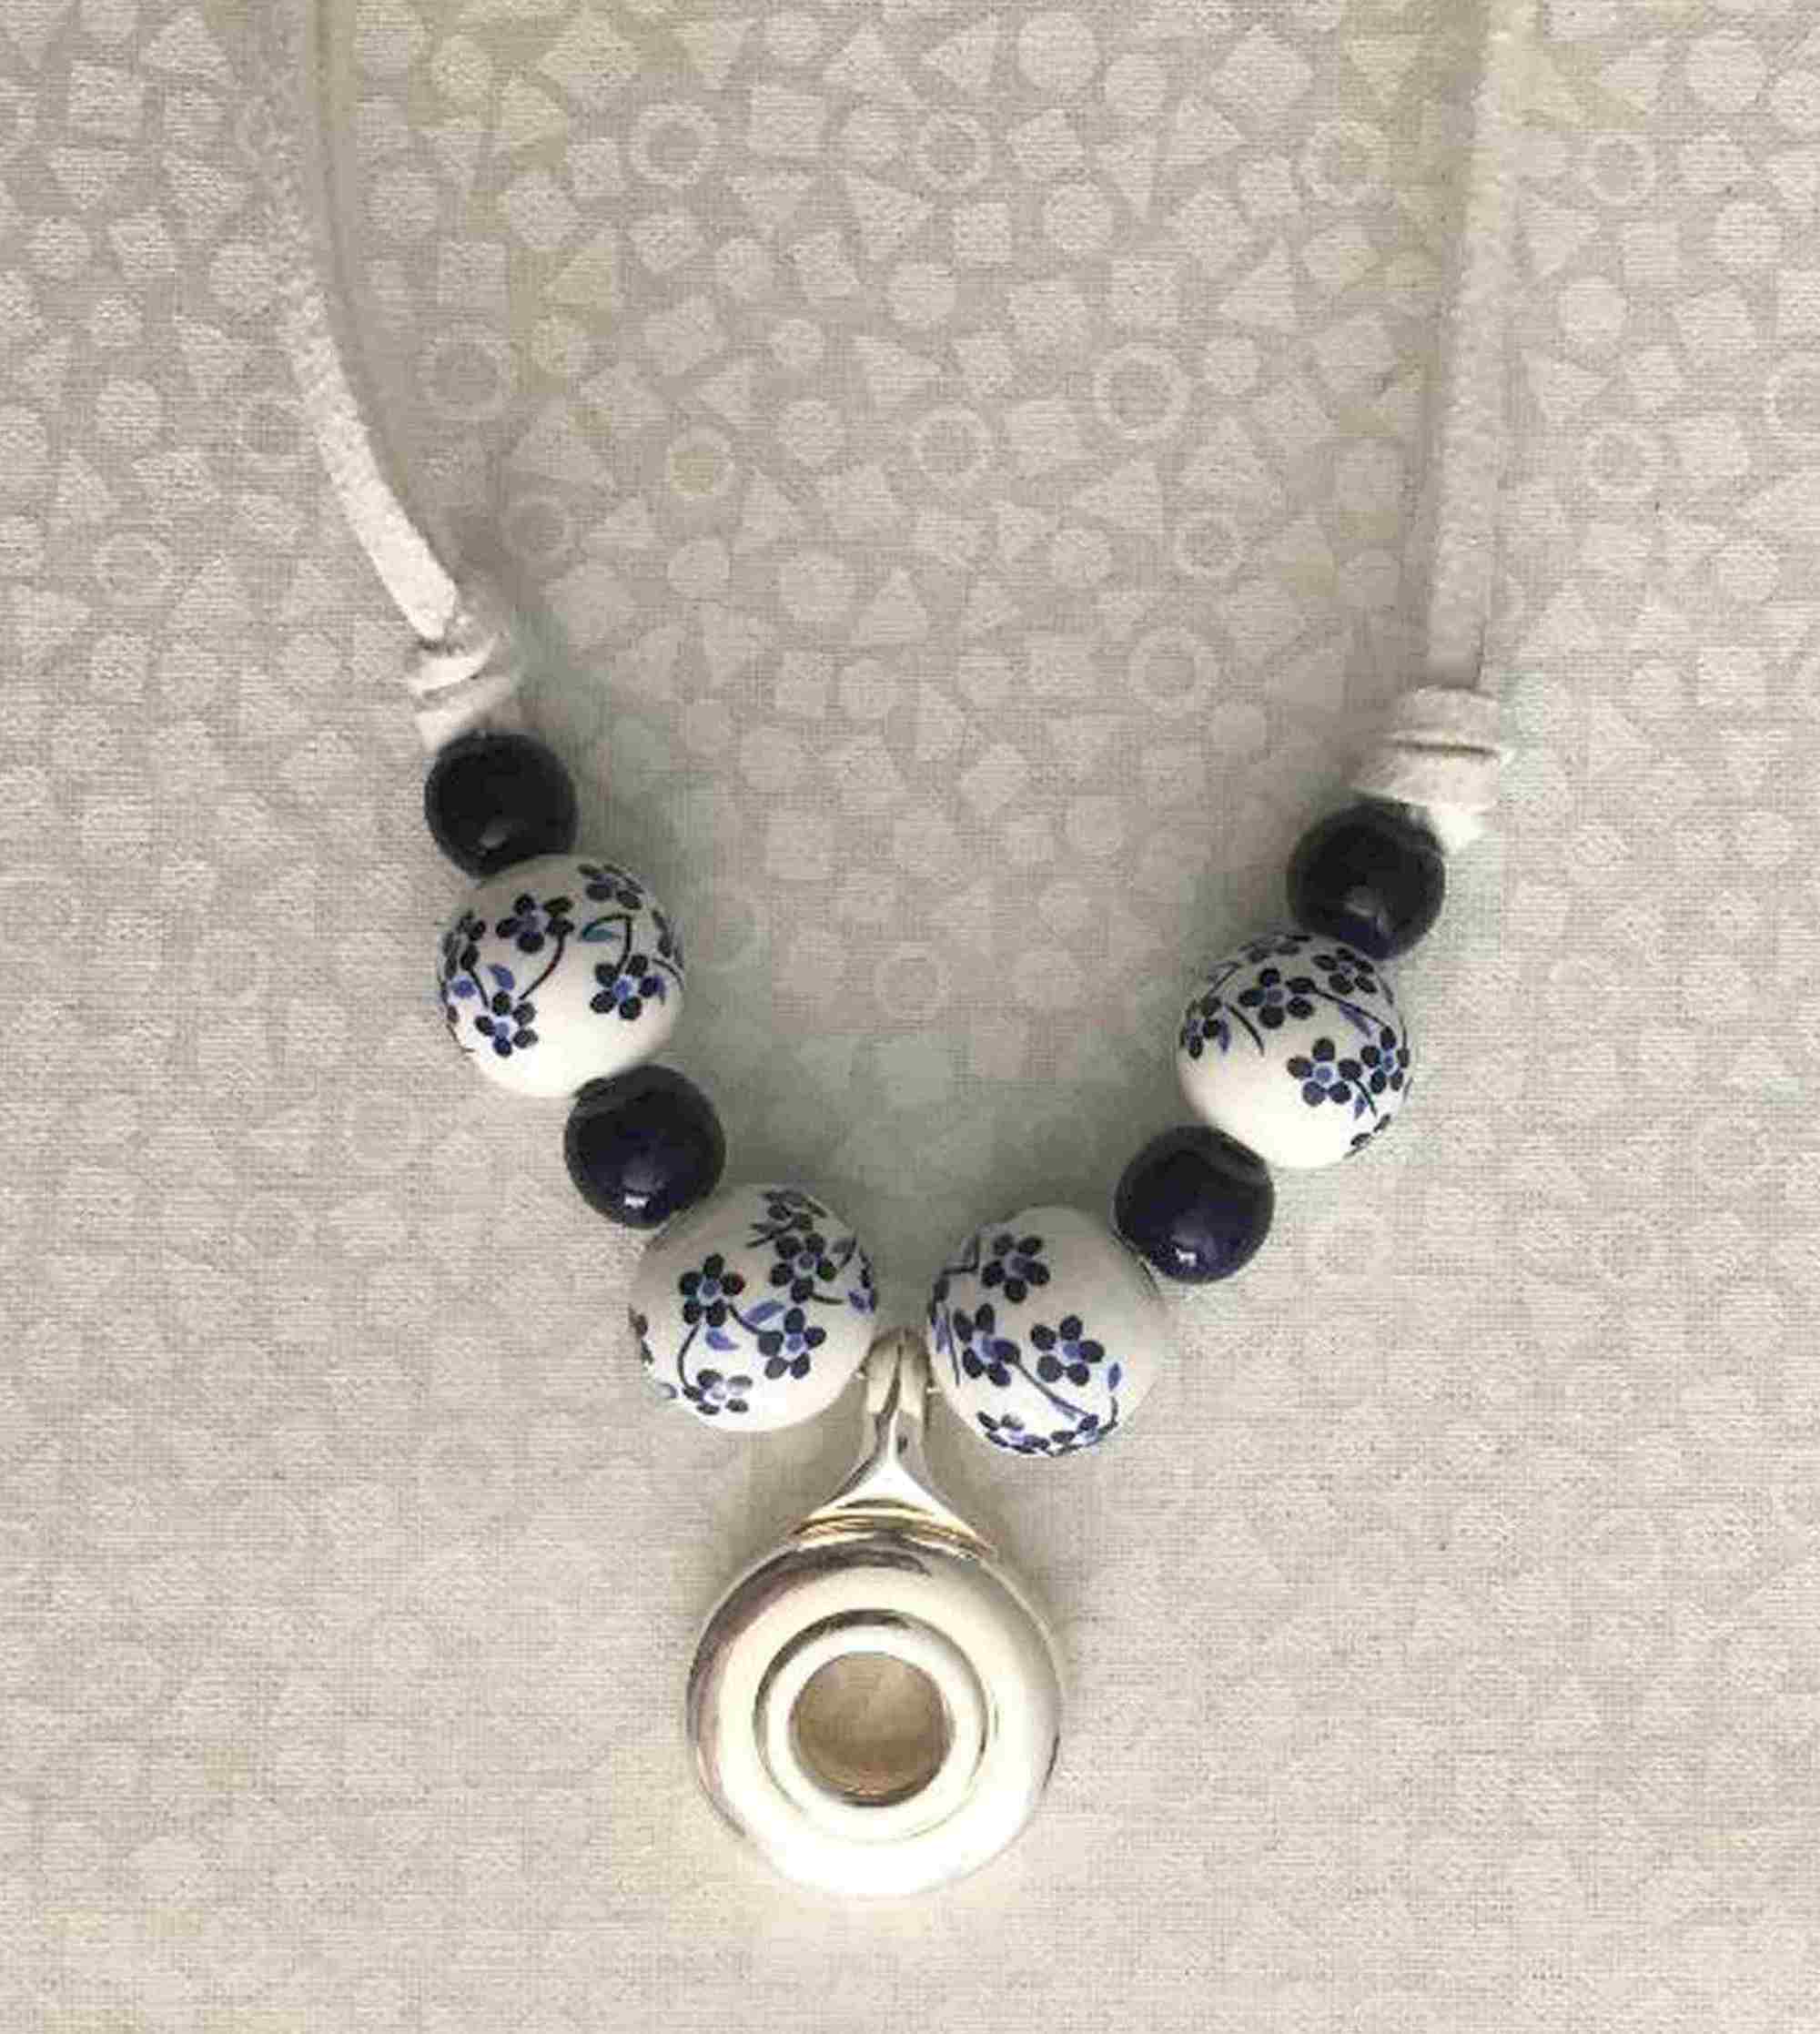 closeup of beads and flute key pendant.